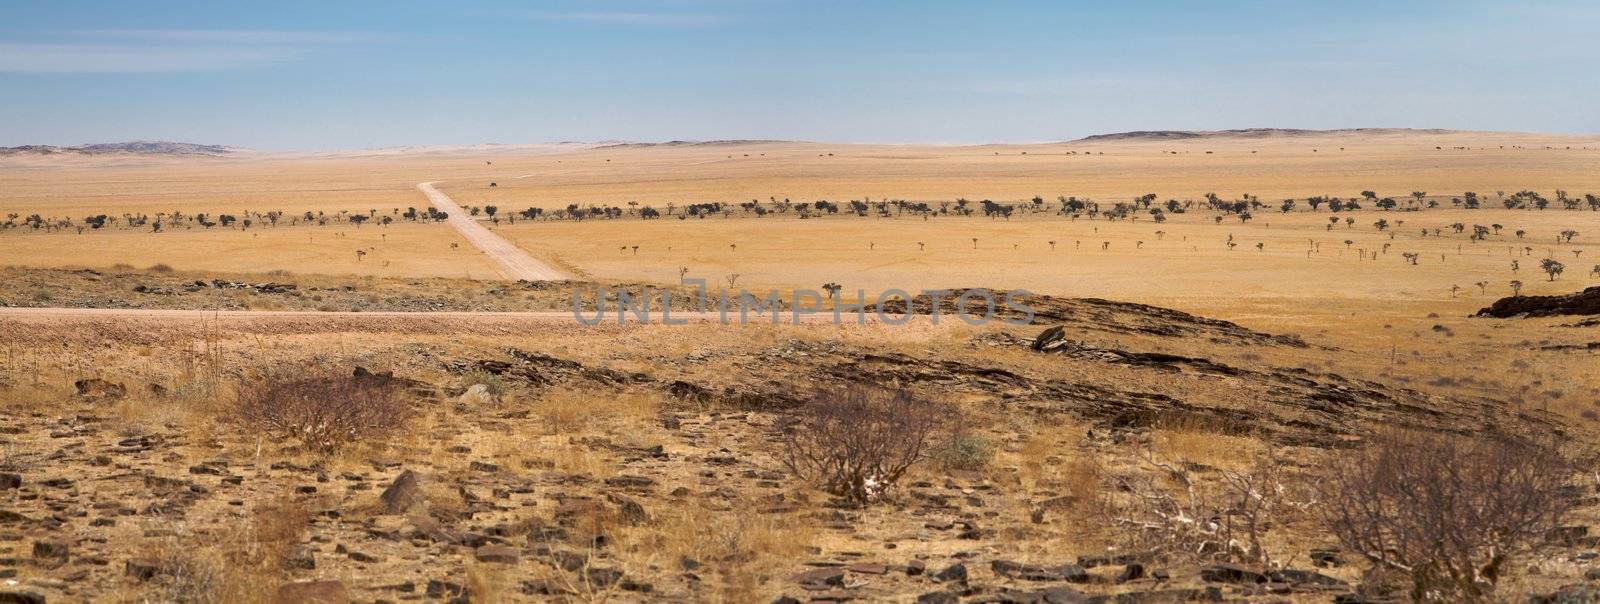 Namib Desert  by watchtheworld